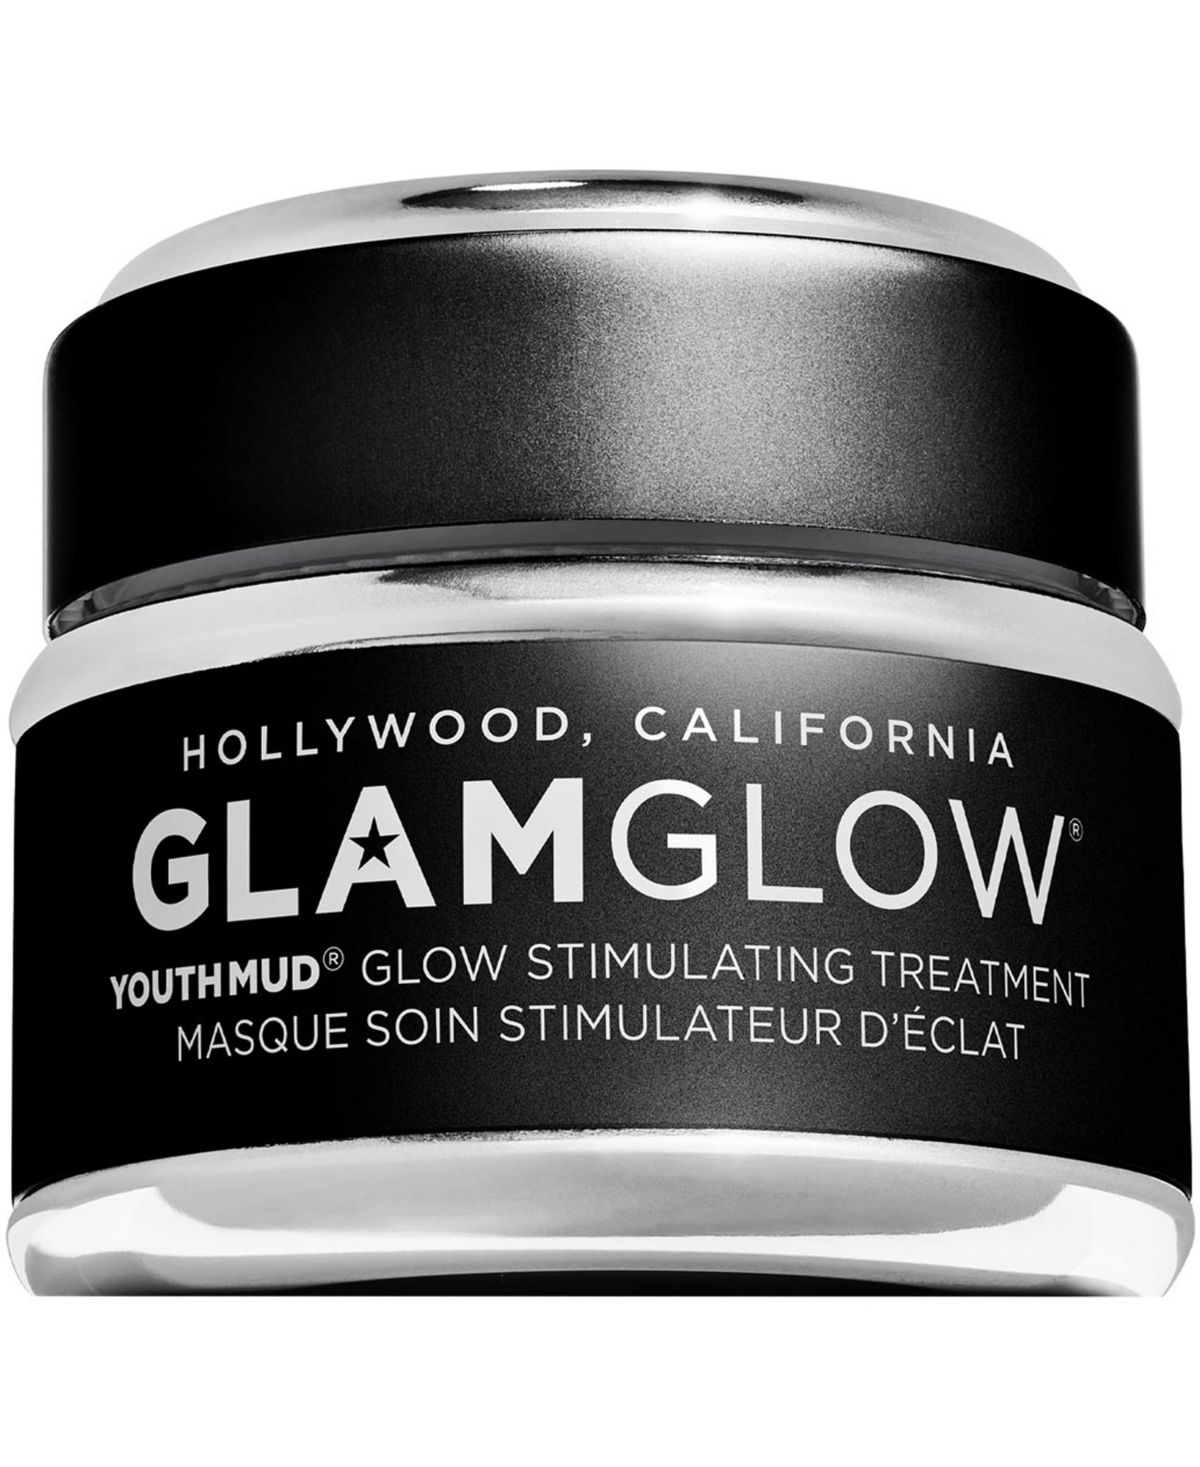 Glamglow Youthmud Glow Stimulating Treatment Mask, 1.7-oz. | Macys (US)